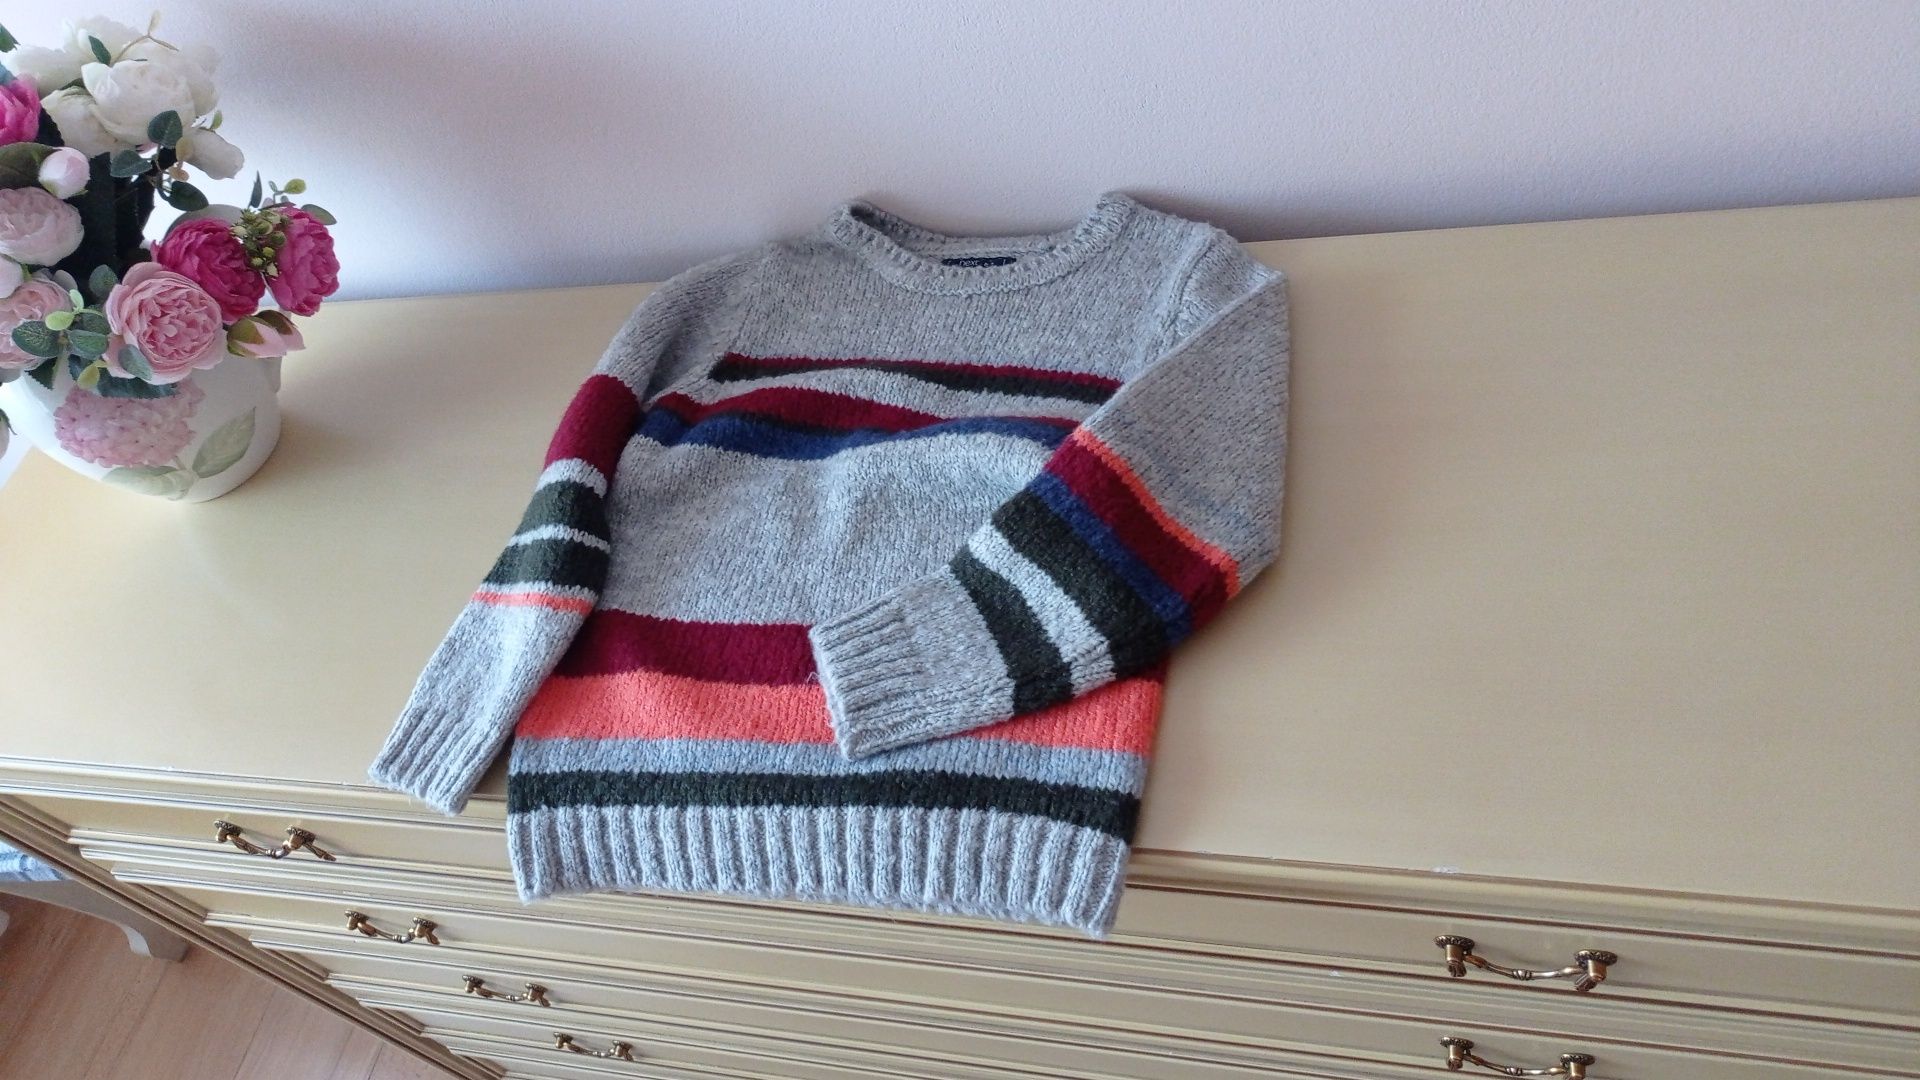 Свитер пуловер Next, свитшот на мальчика 130-140 см